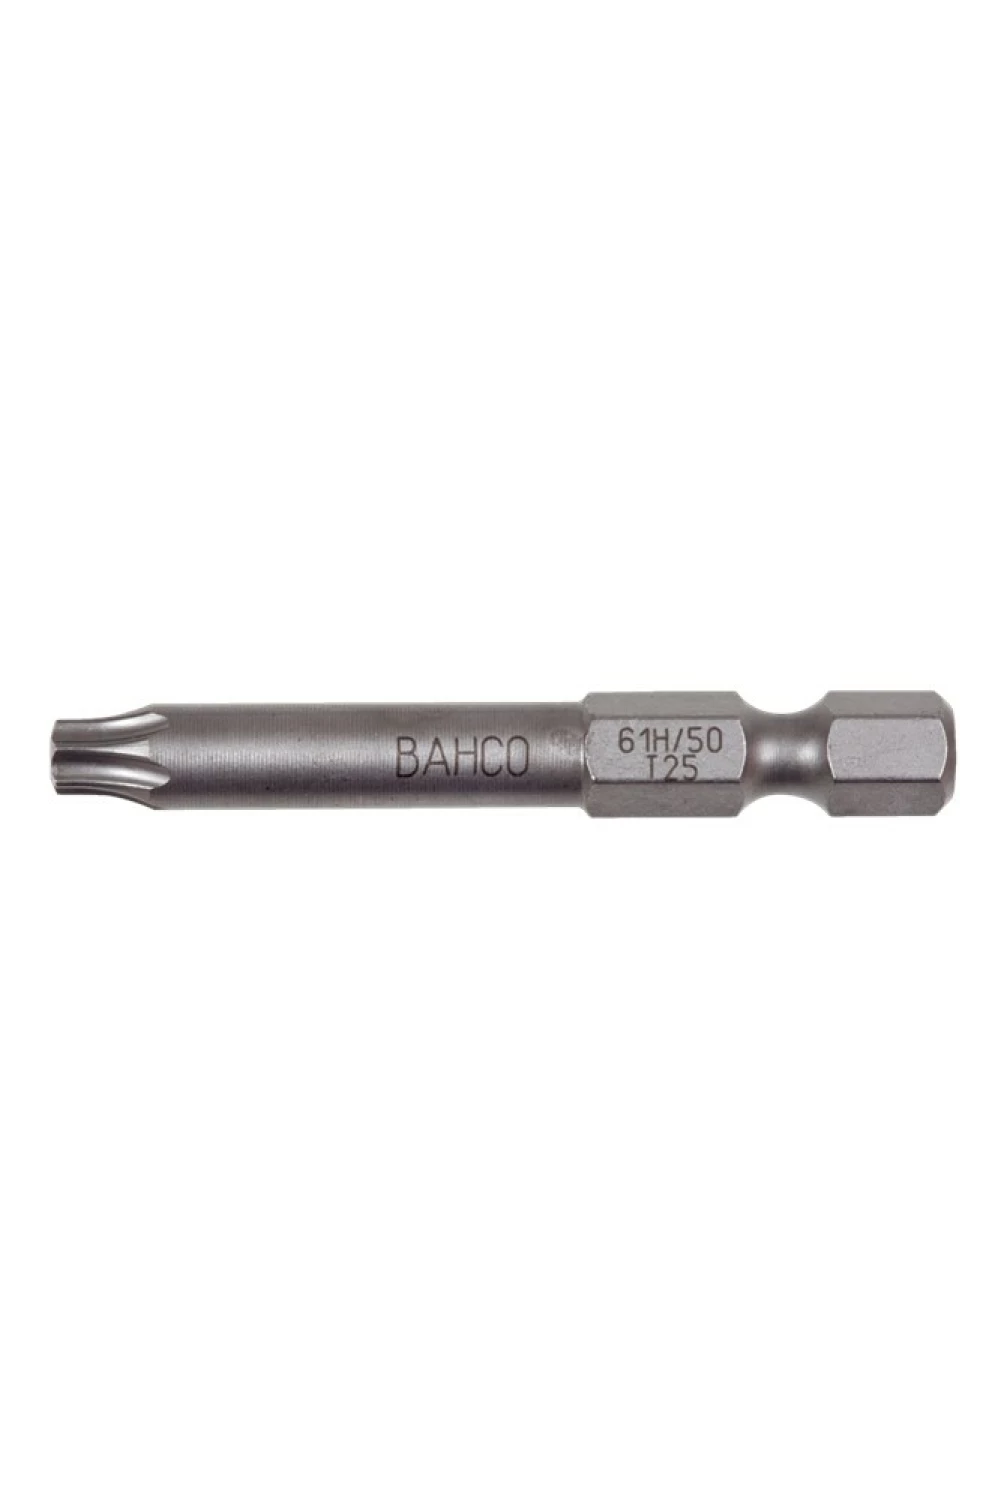 Bahco 61H/50T25 1/4" Bit Torx Extra hard T25 - 50 mm (5st)